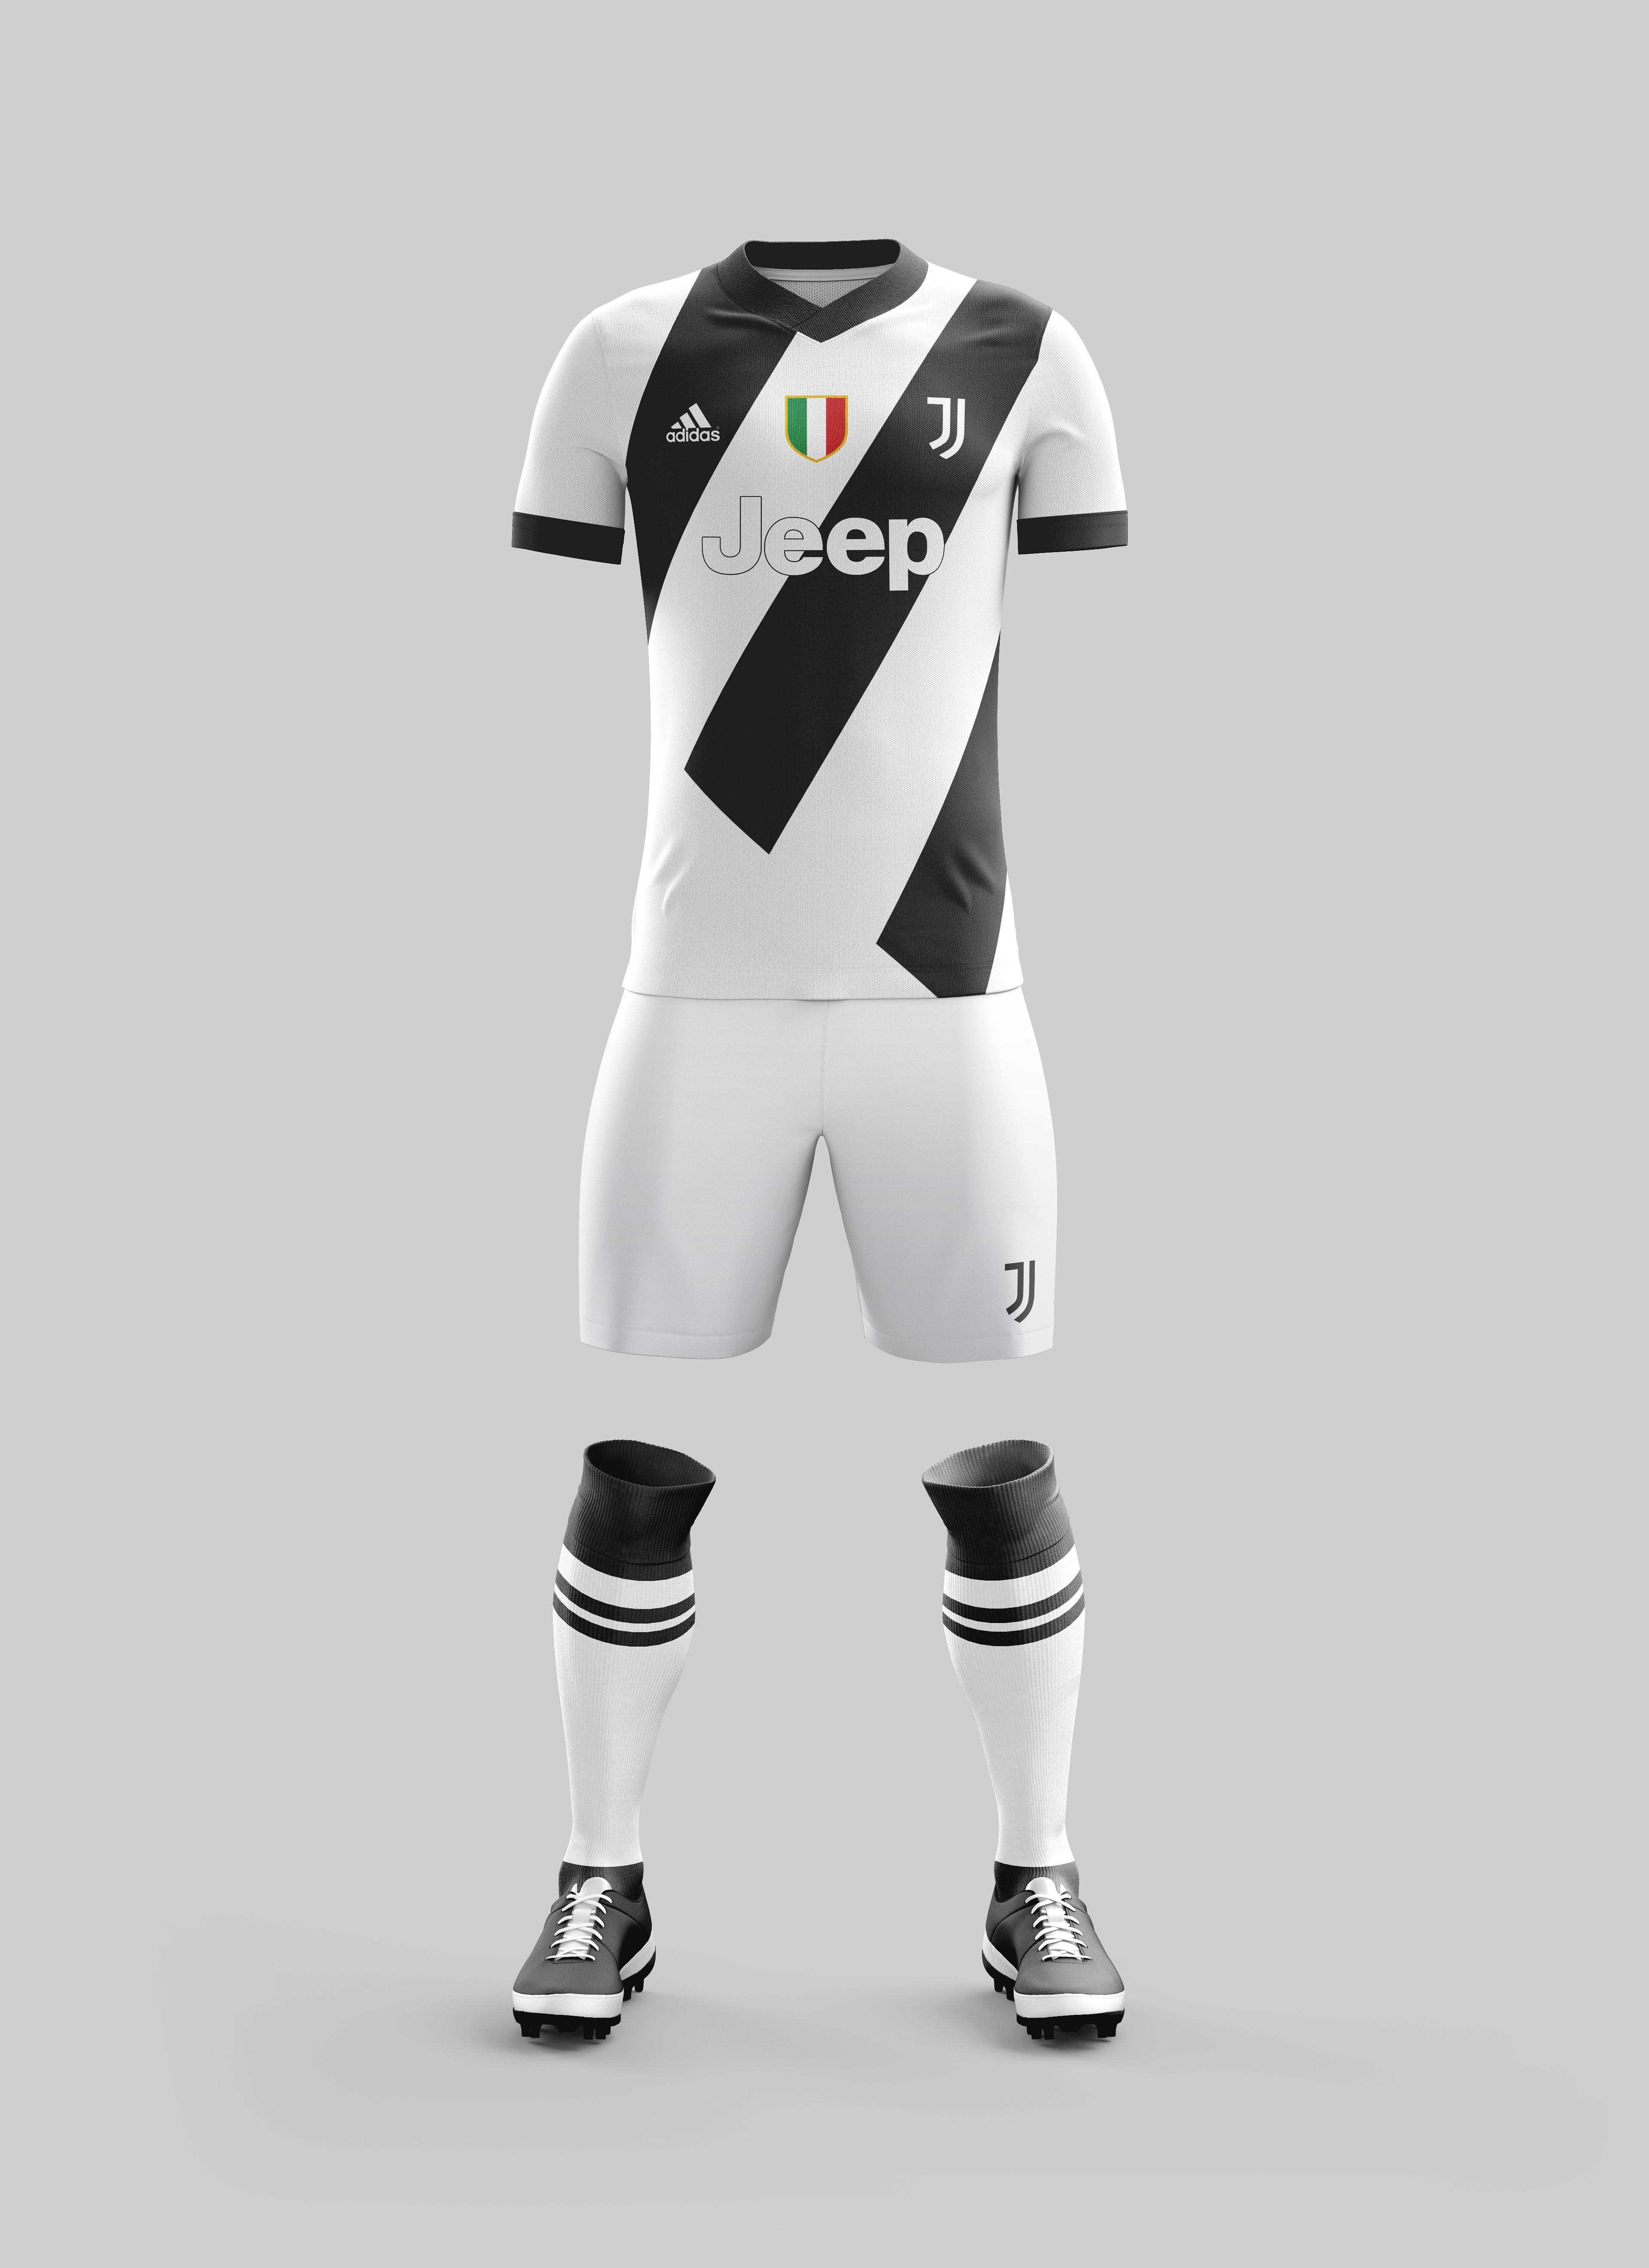 Juventus FC Home Kit Concept 2018 Season